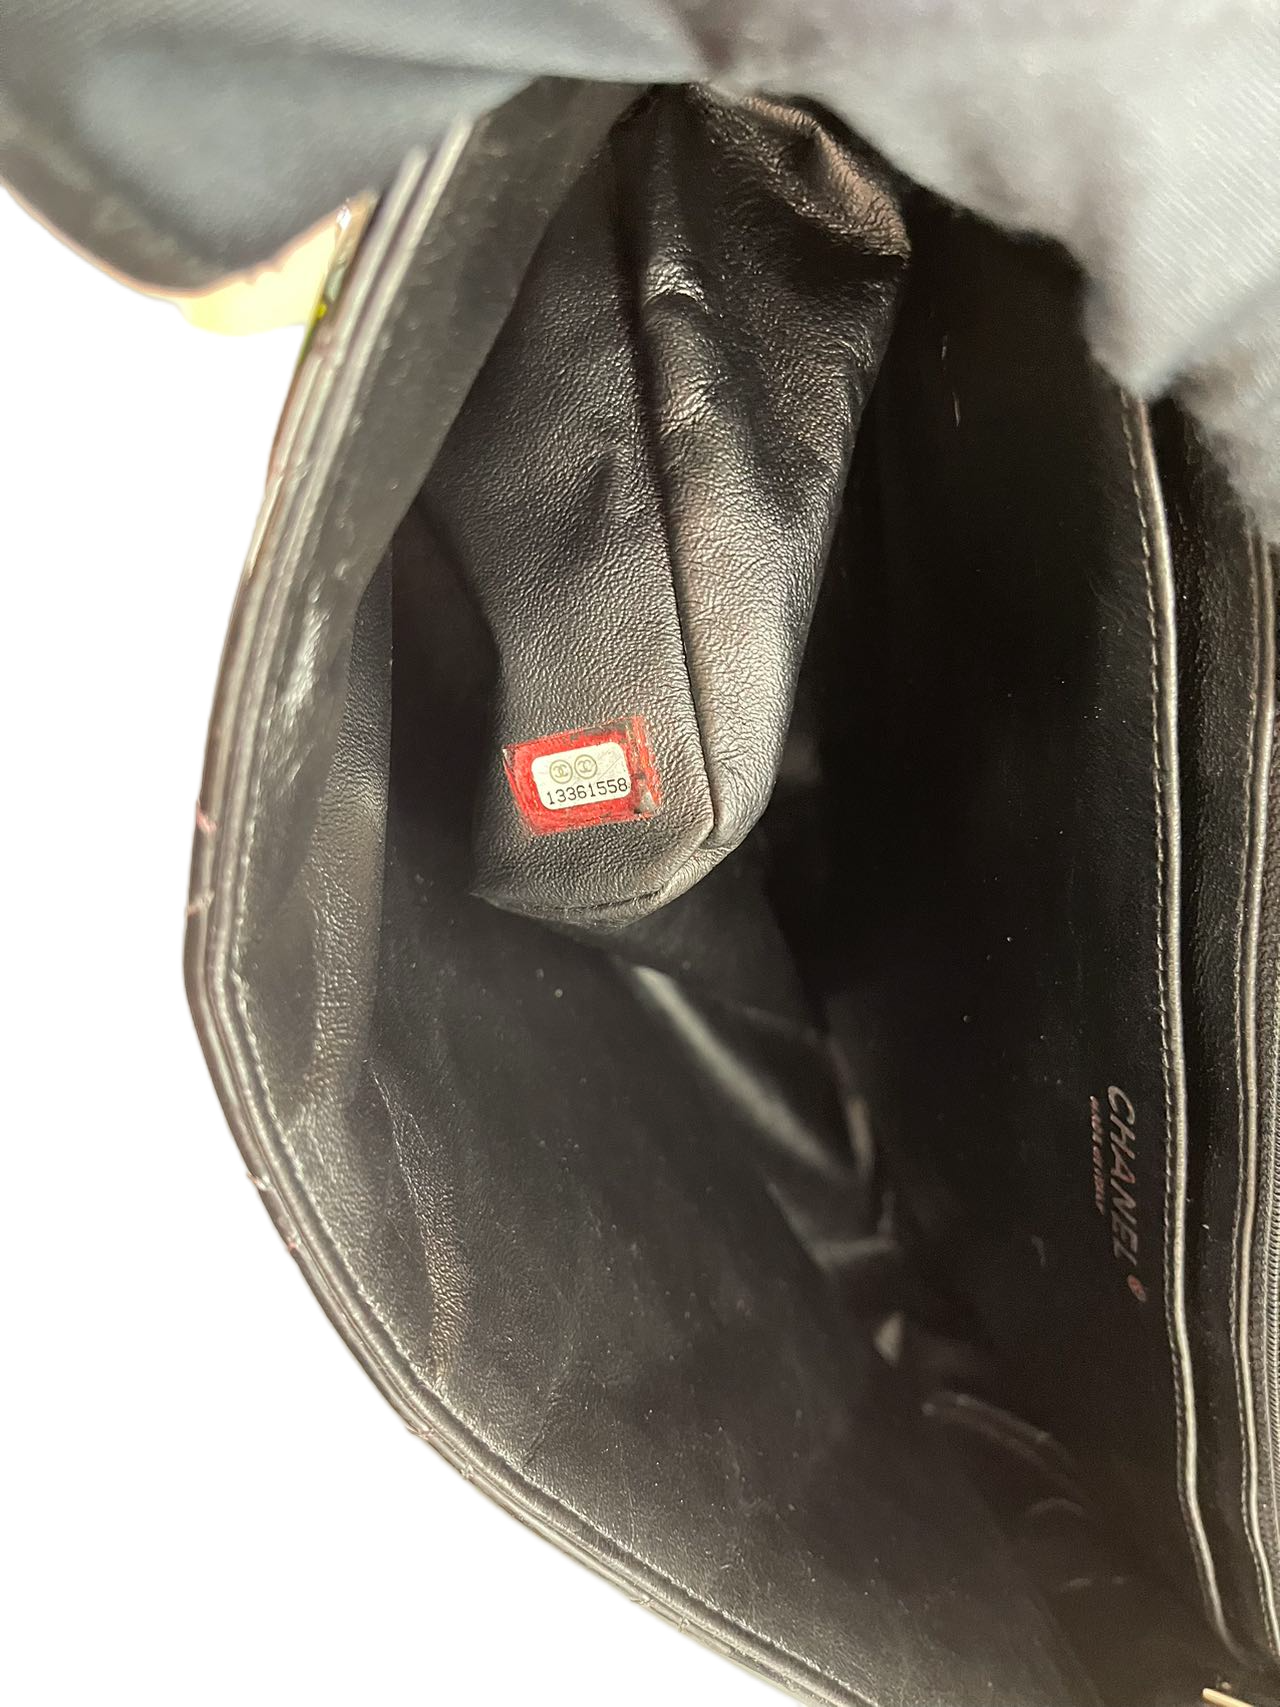 Preloved CHANEL Black Patent Leather Jumbo Classic Flap Shoulder Bag